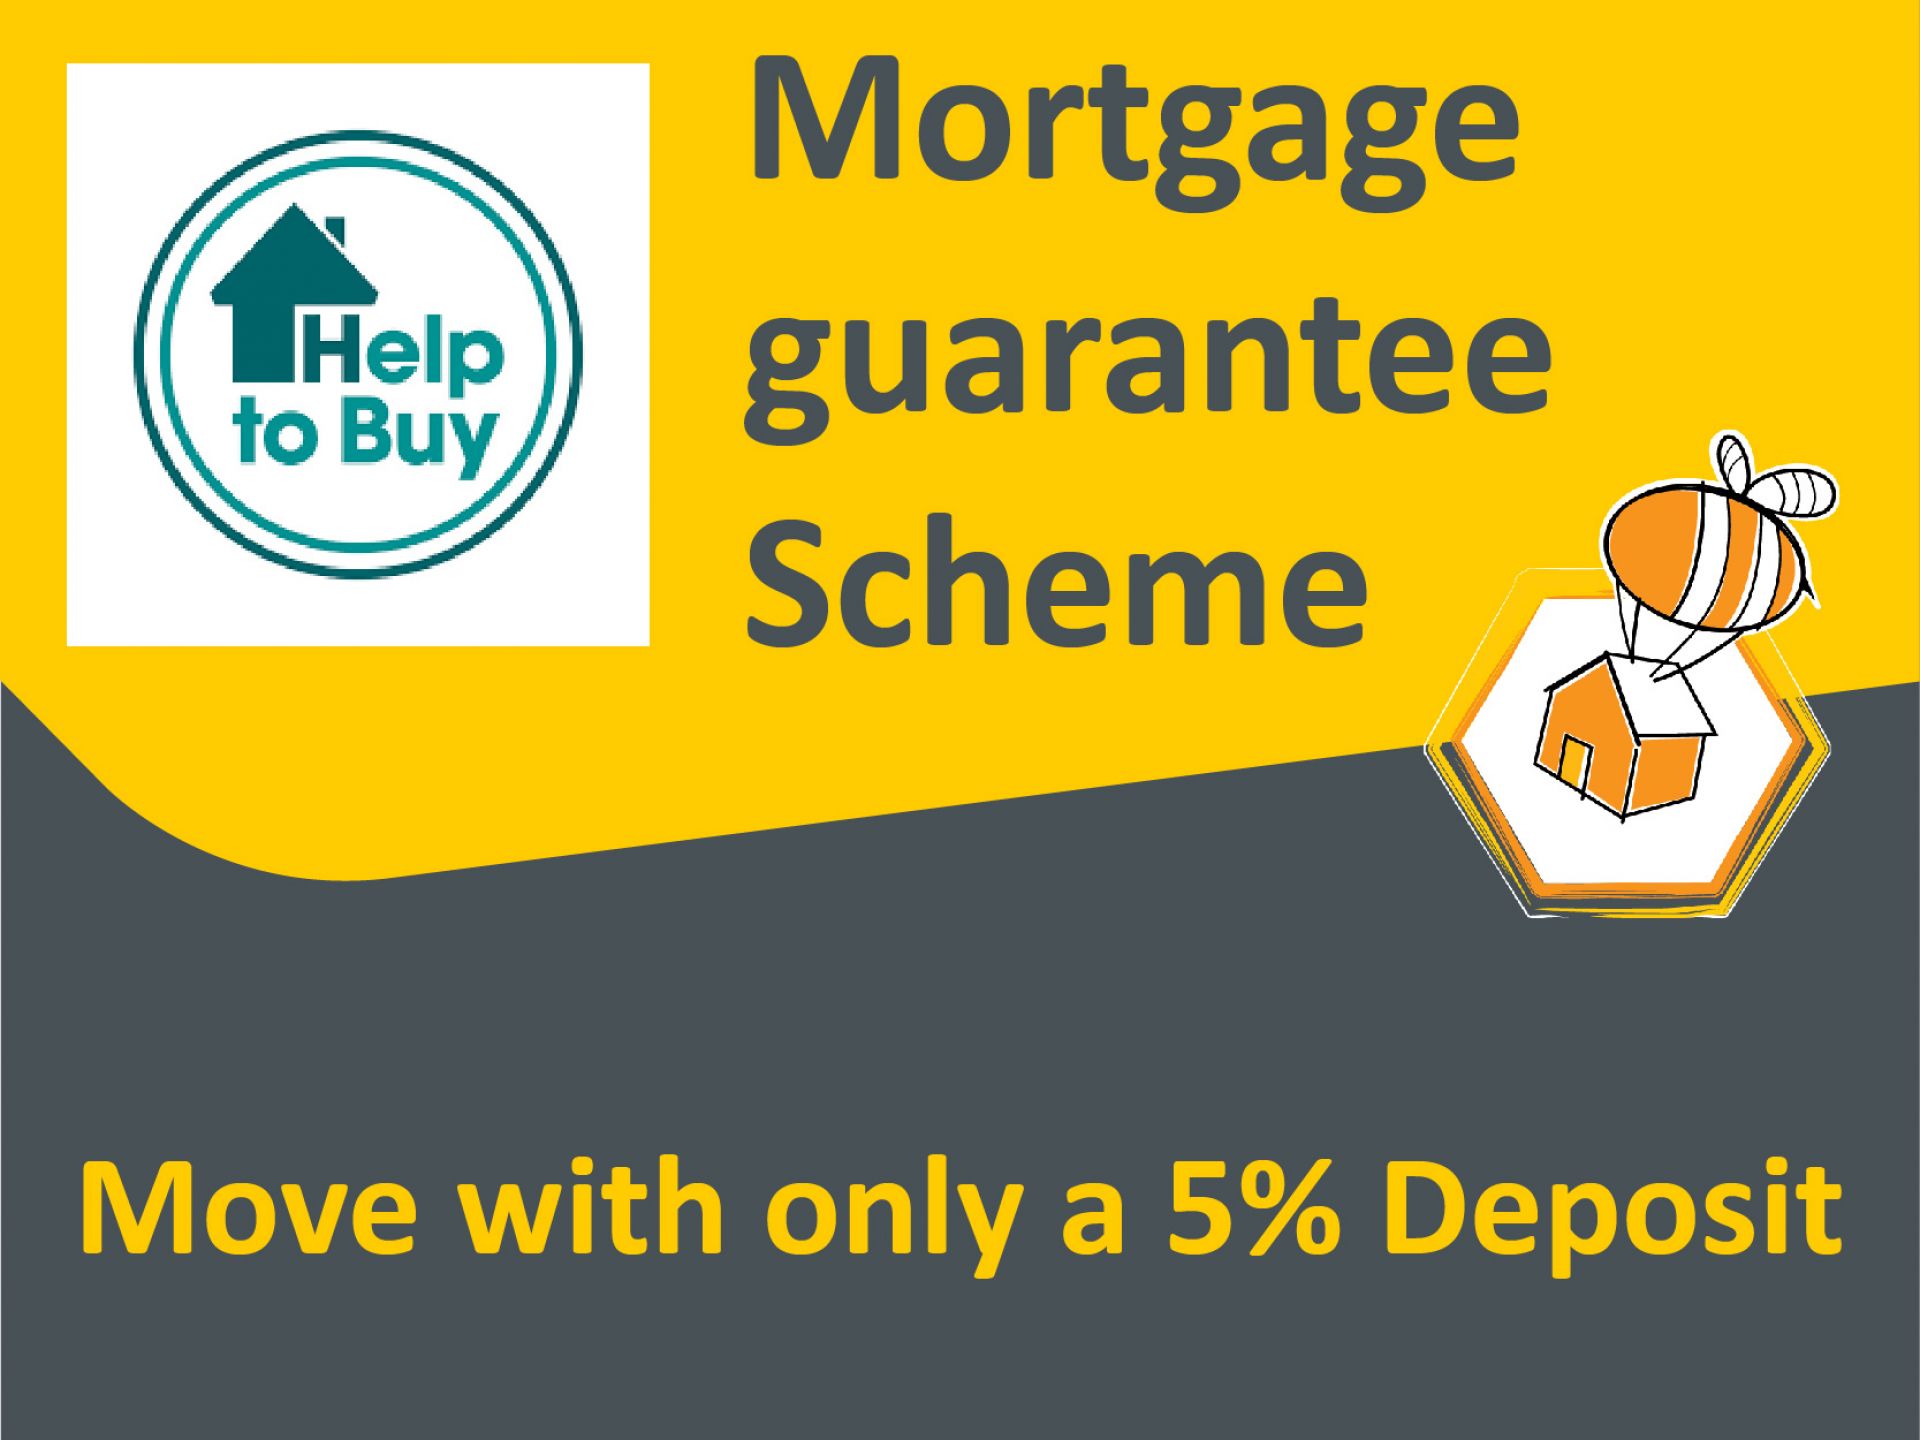 Mortgage guarantee scheme 2 01